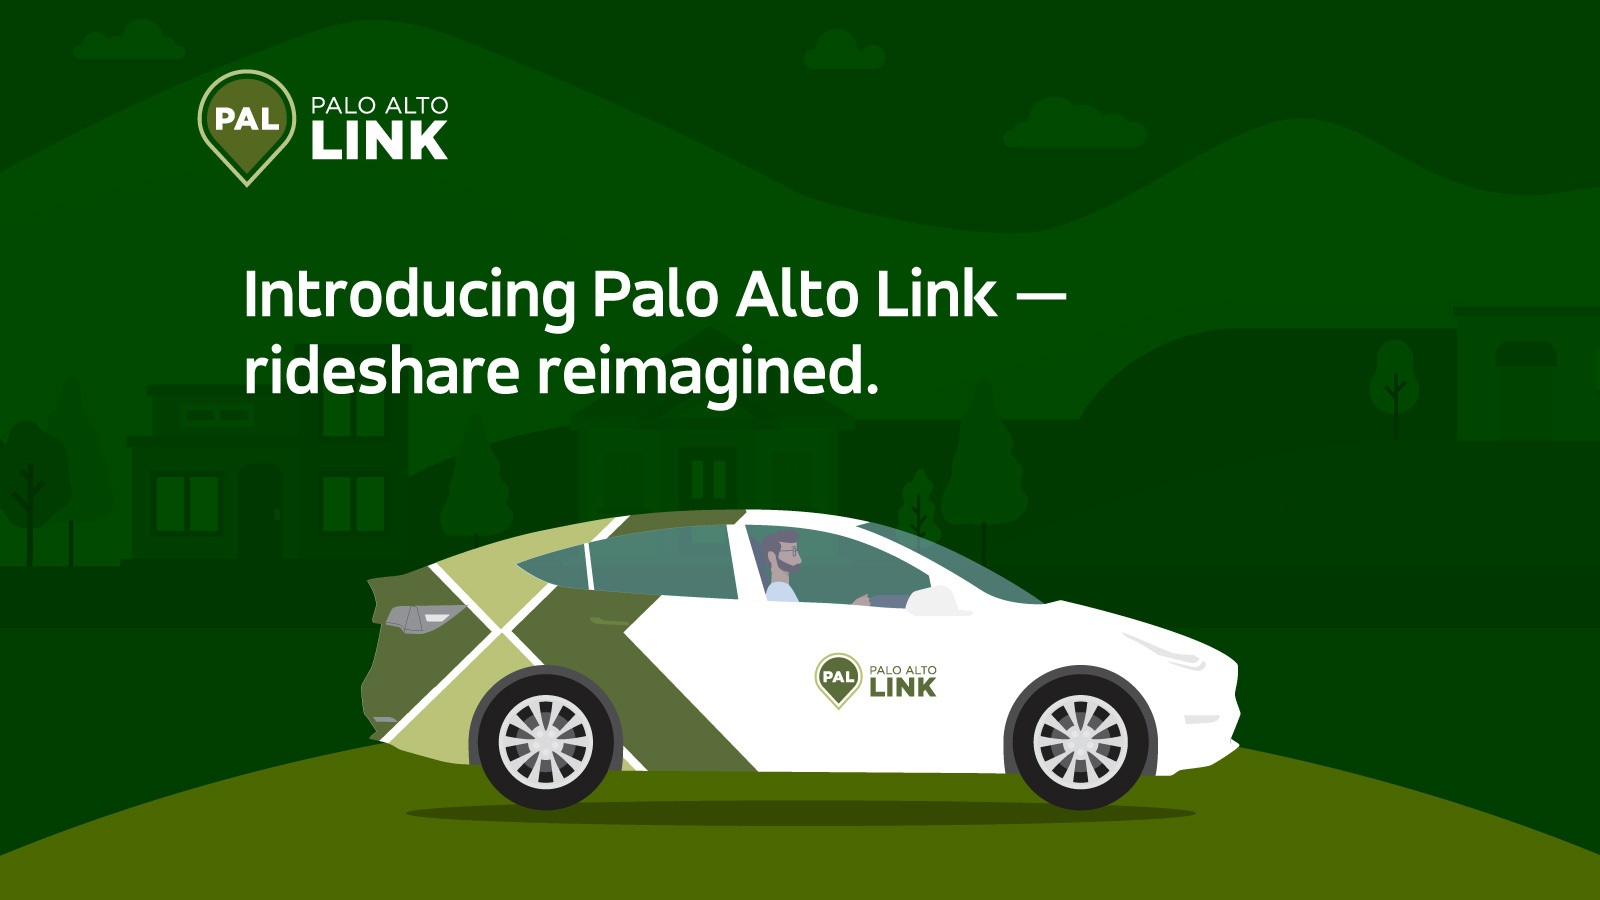 Palo Alto Link, reimagining rideshare